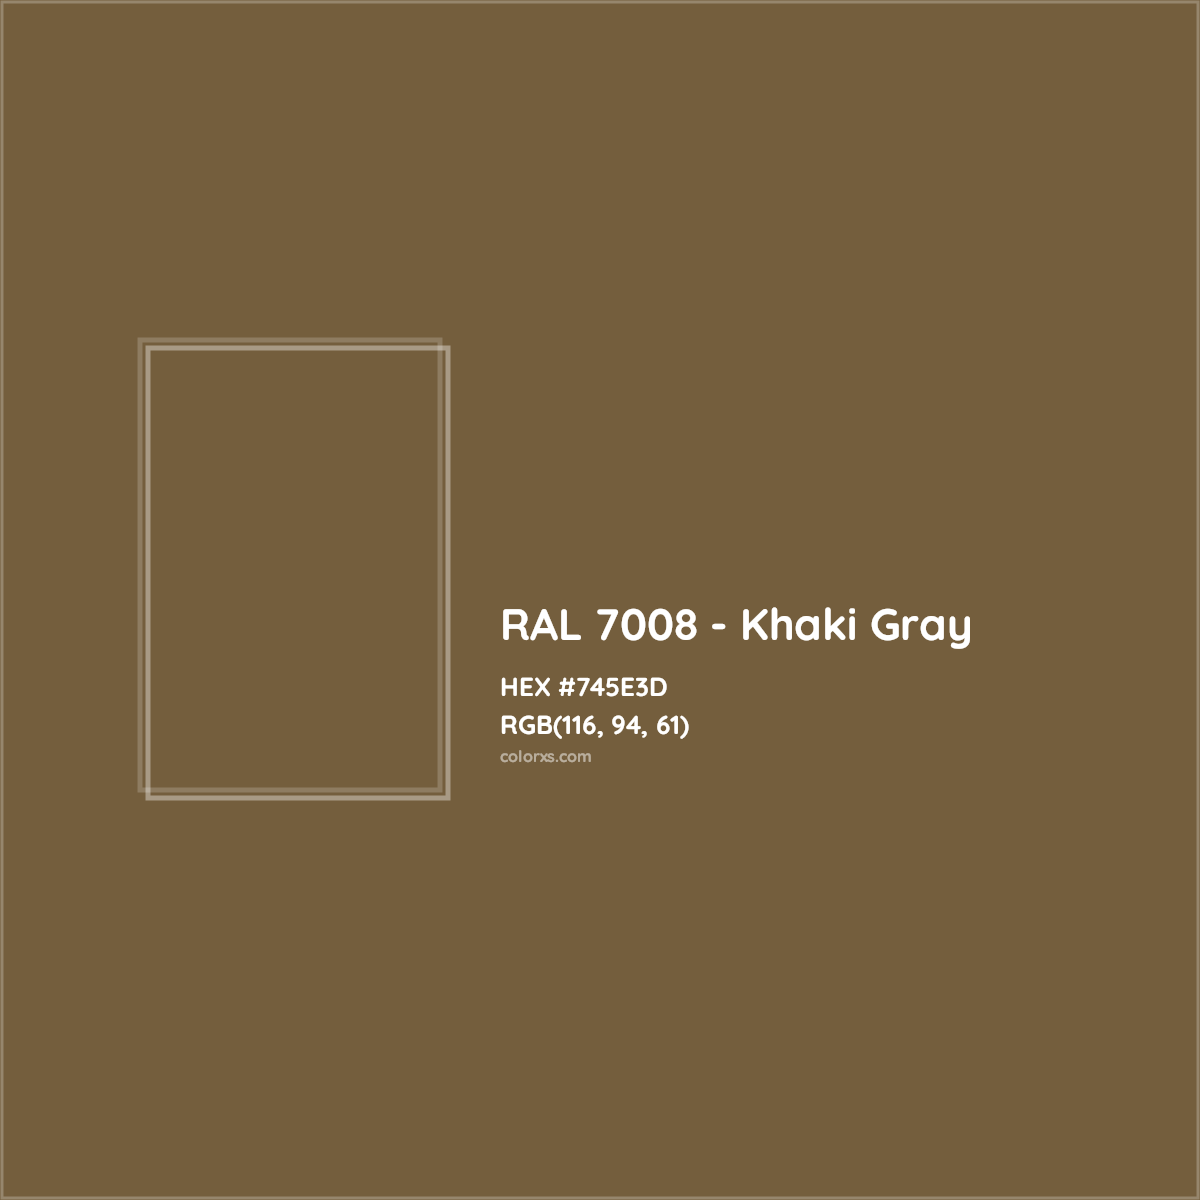 HEX #745E3D RAL 7008 - Khaki Gray CMS RAL Classic - Color Code